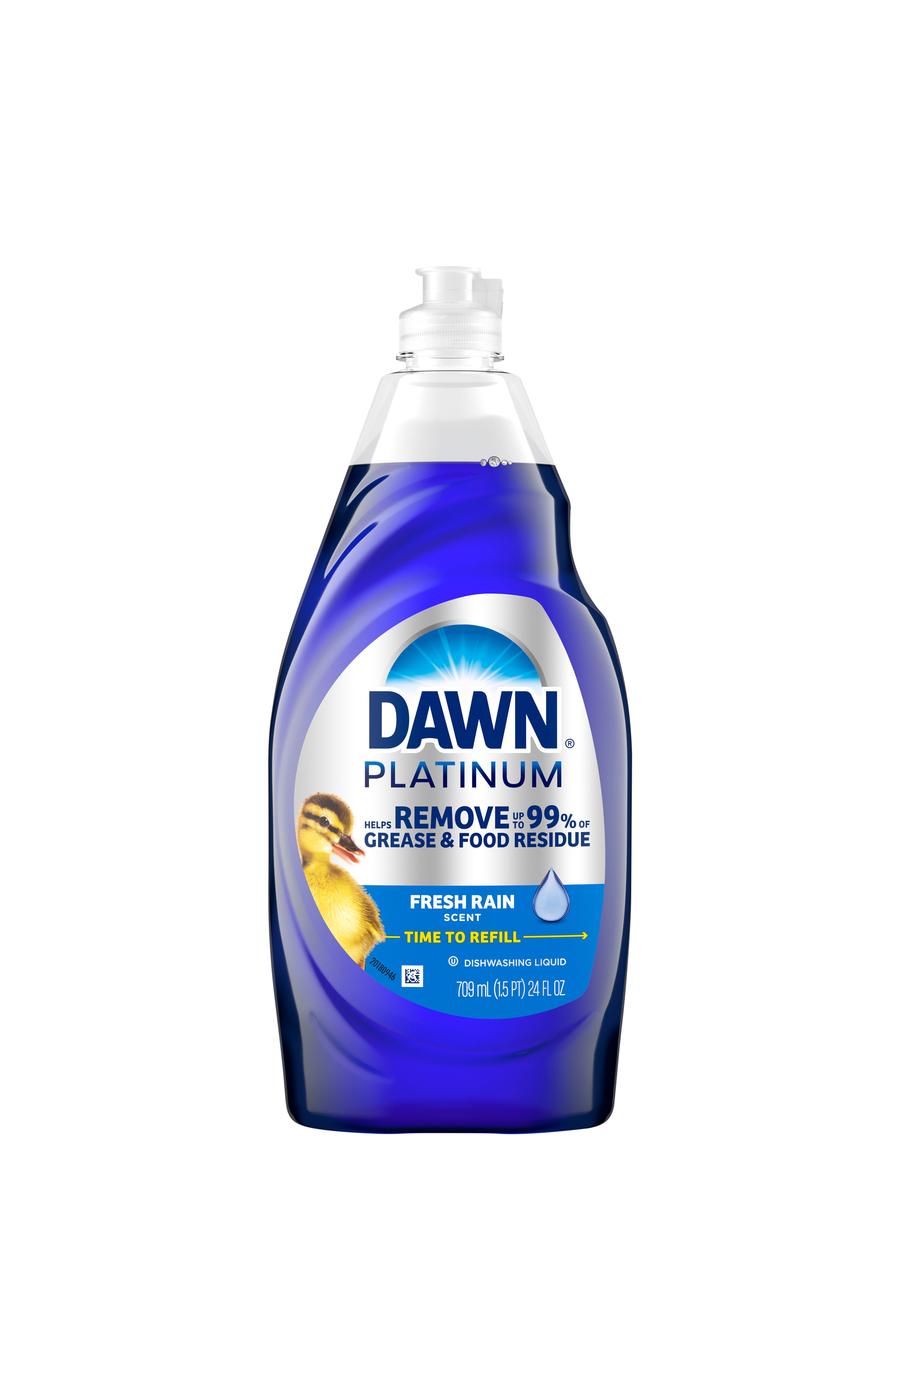 Dawn Platinum Refreshing Rain Liquid Dish Soap; image 1 of 5